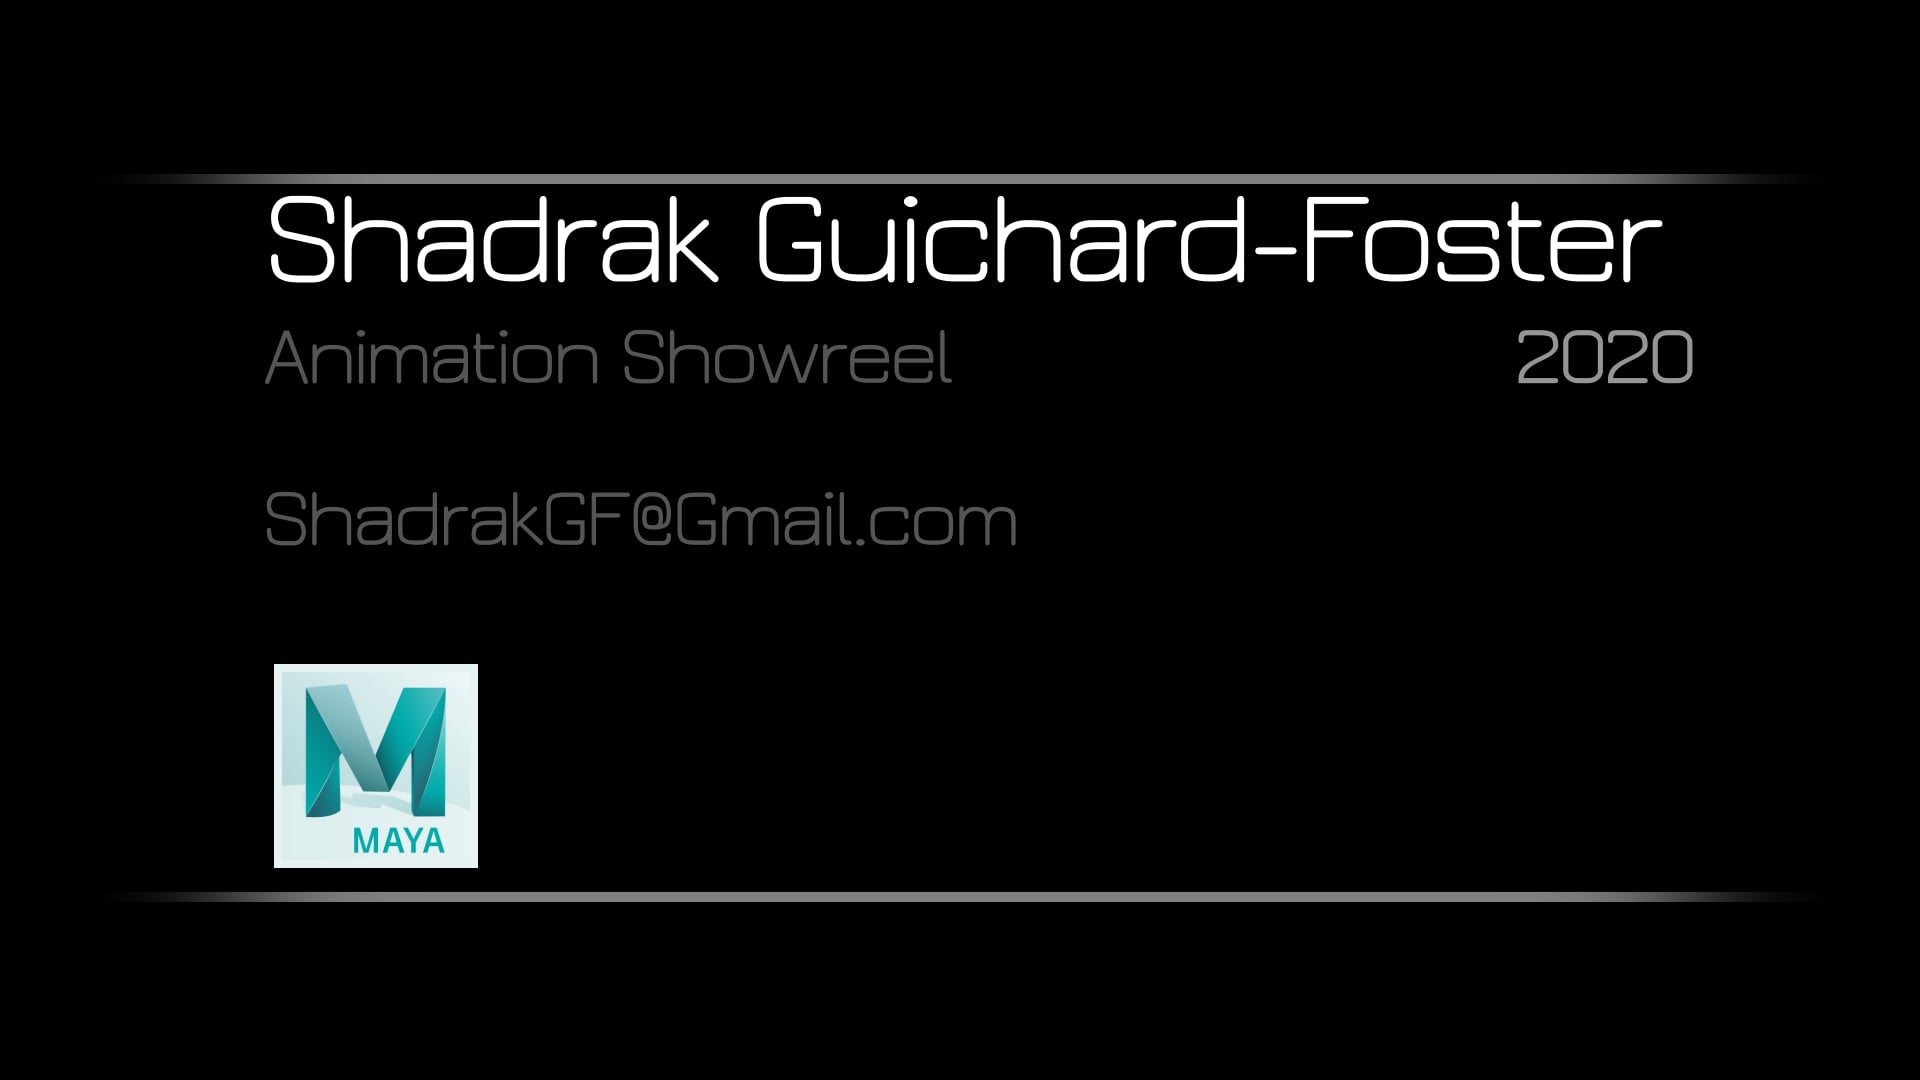 Shadrak GF Animation Showreel 2020.5